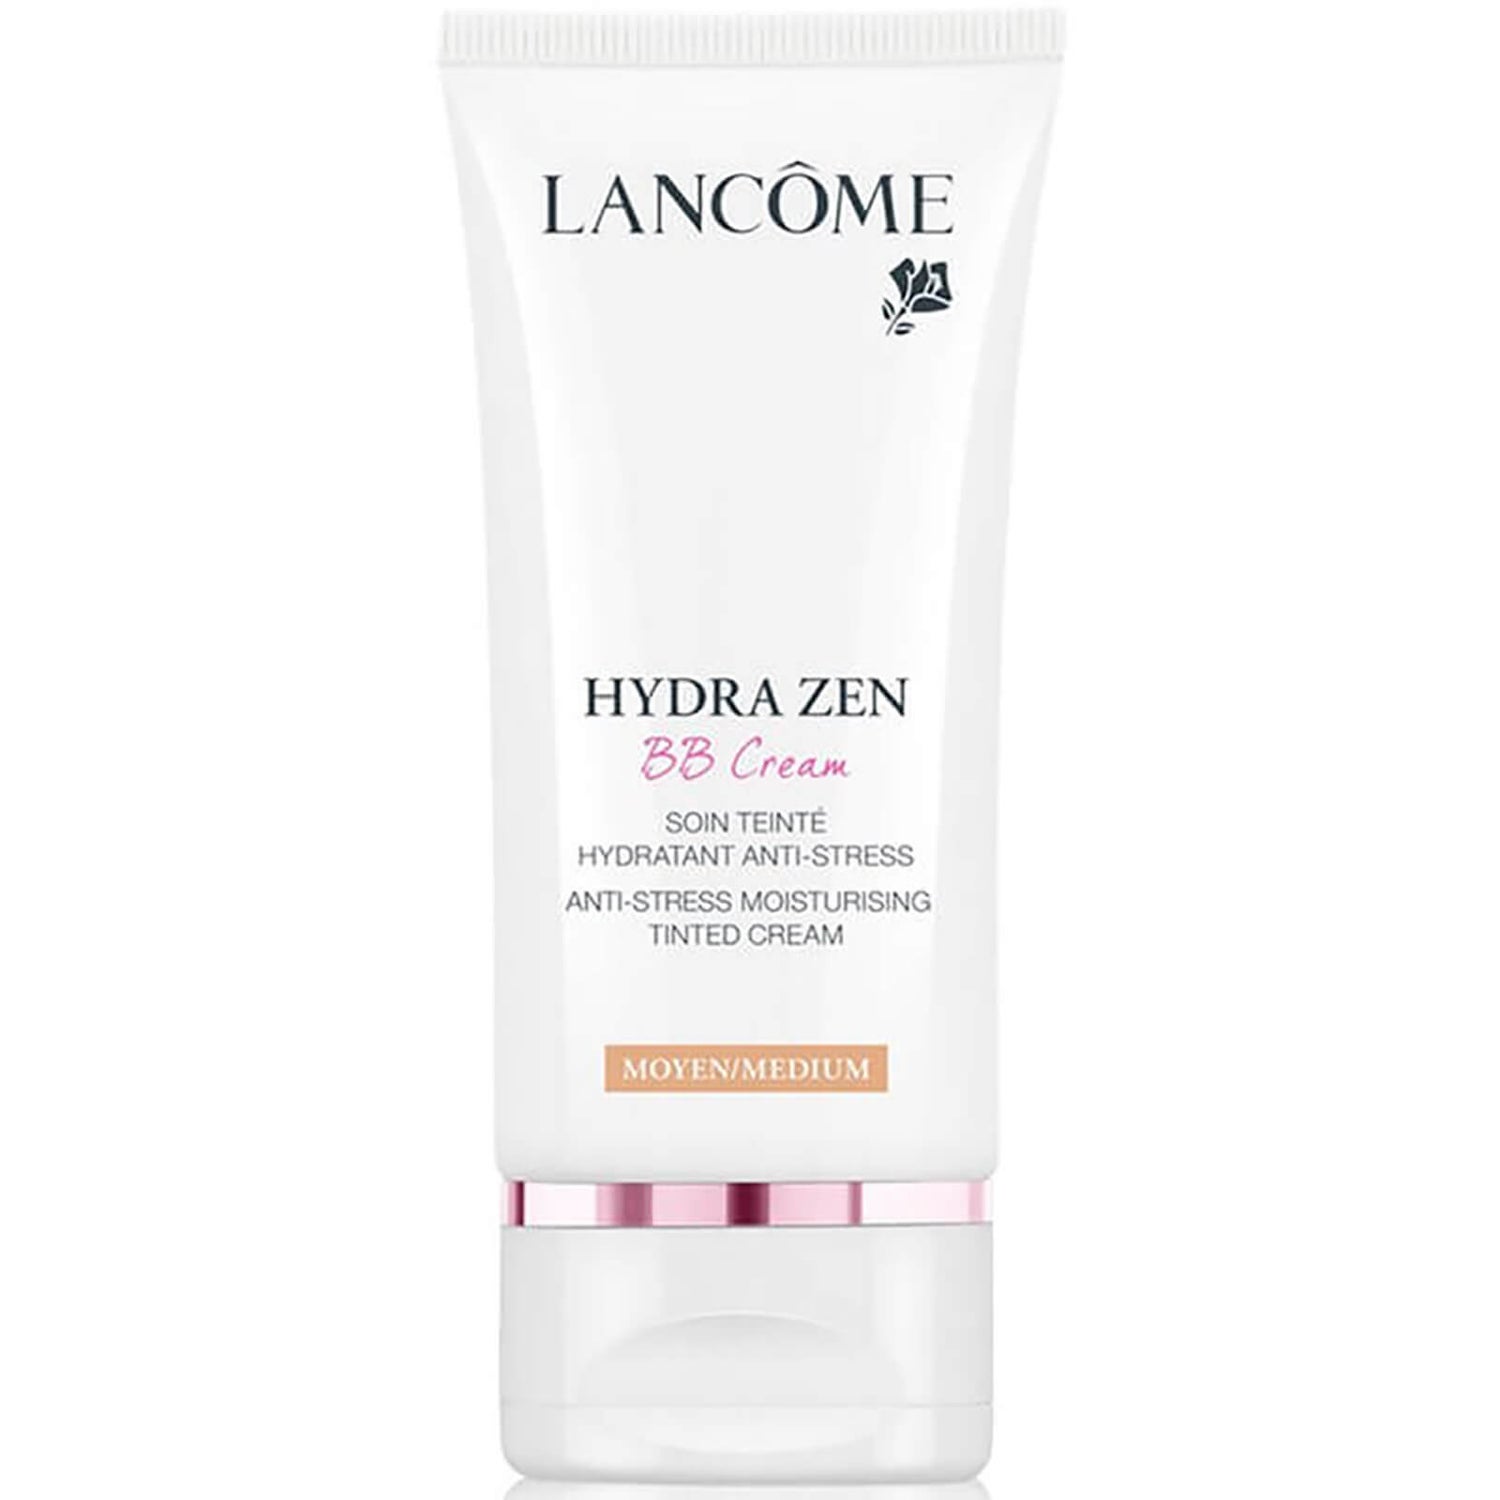 Lancôme Hydra Zen crème BB (50ml)